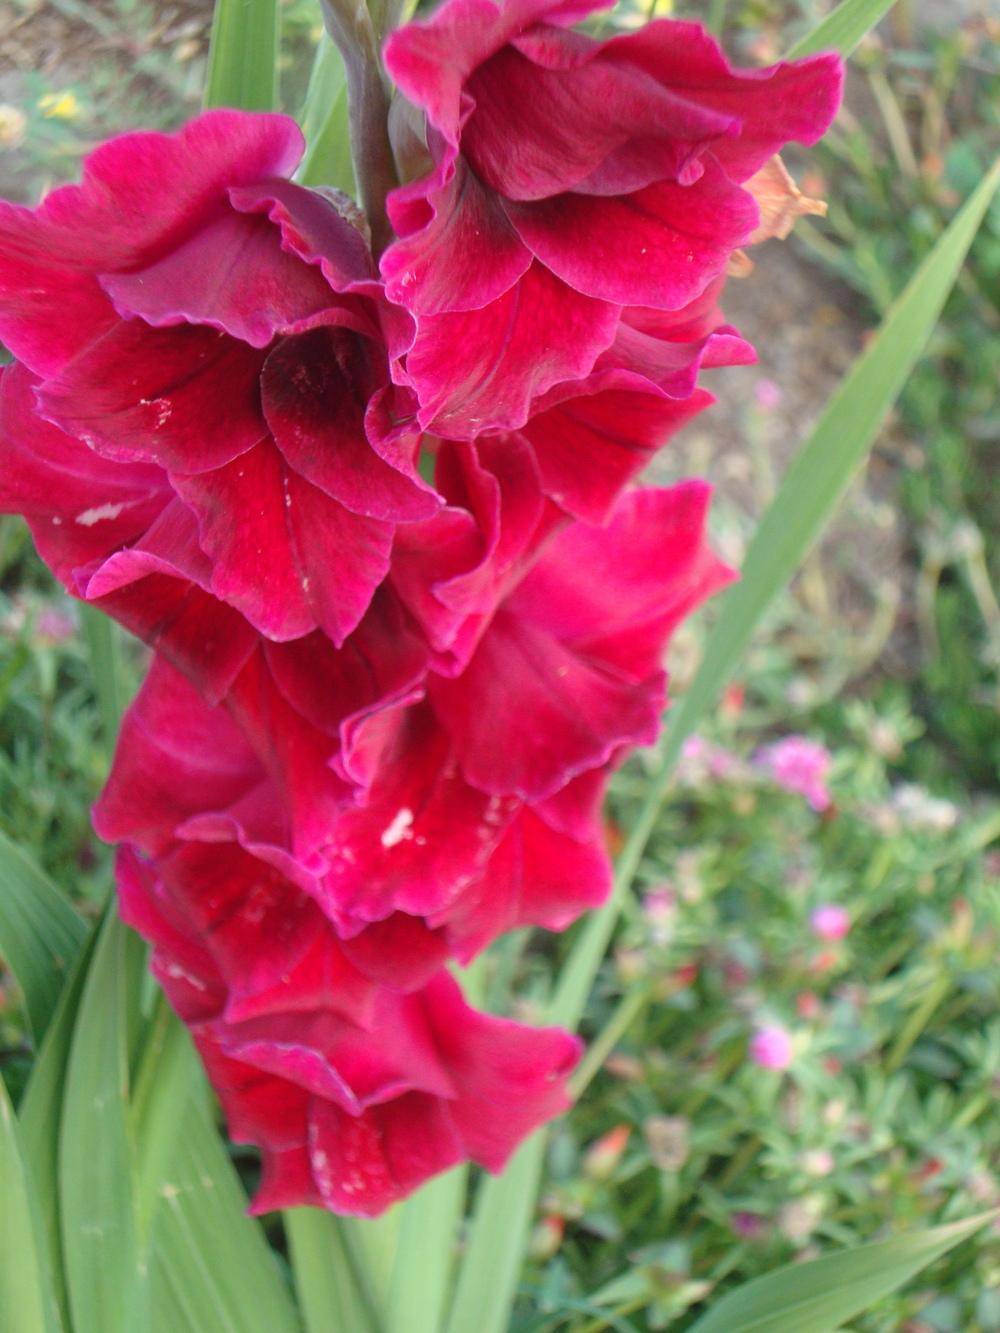 Photo of Gladiola (Gladiolus) uploaded by Paul2032